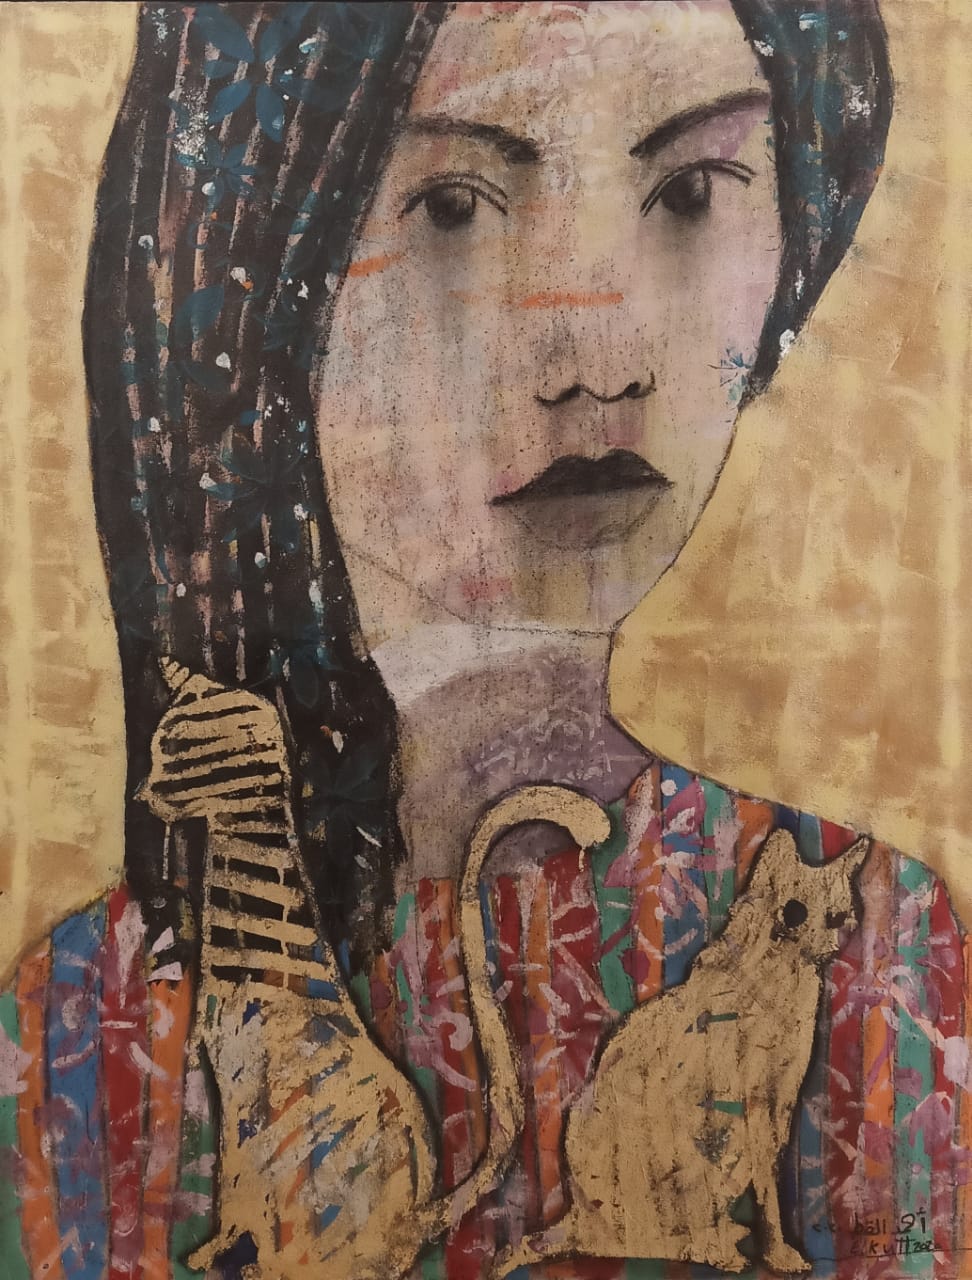 AHMED EL KUTT / Untitled, 130 x 100 cm / Mixed media on canvas / LE 18,000 / USD 1,150 / PALESTINE-188